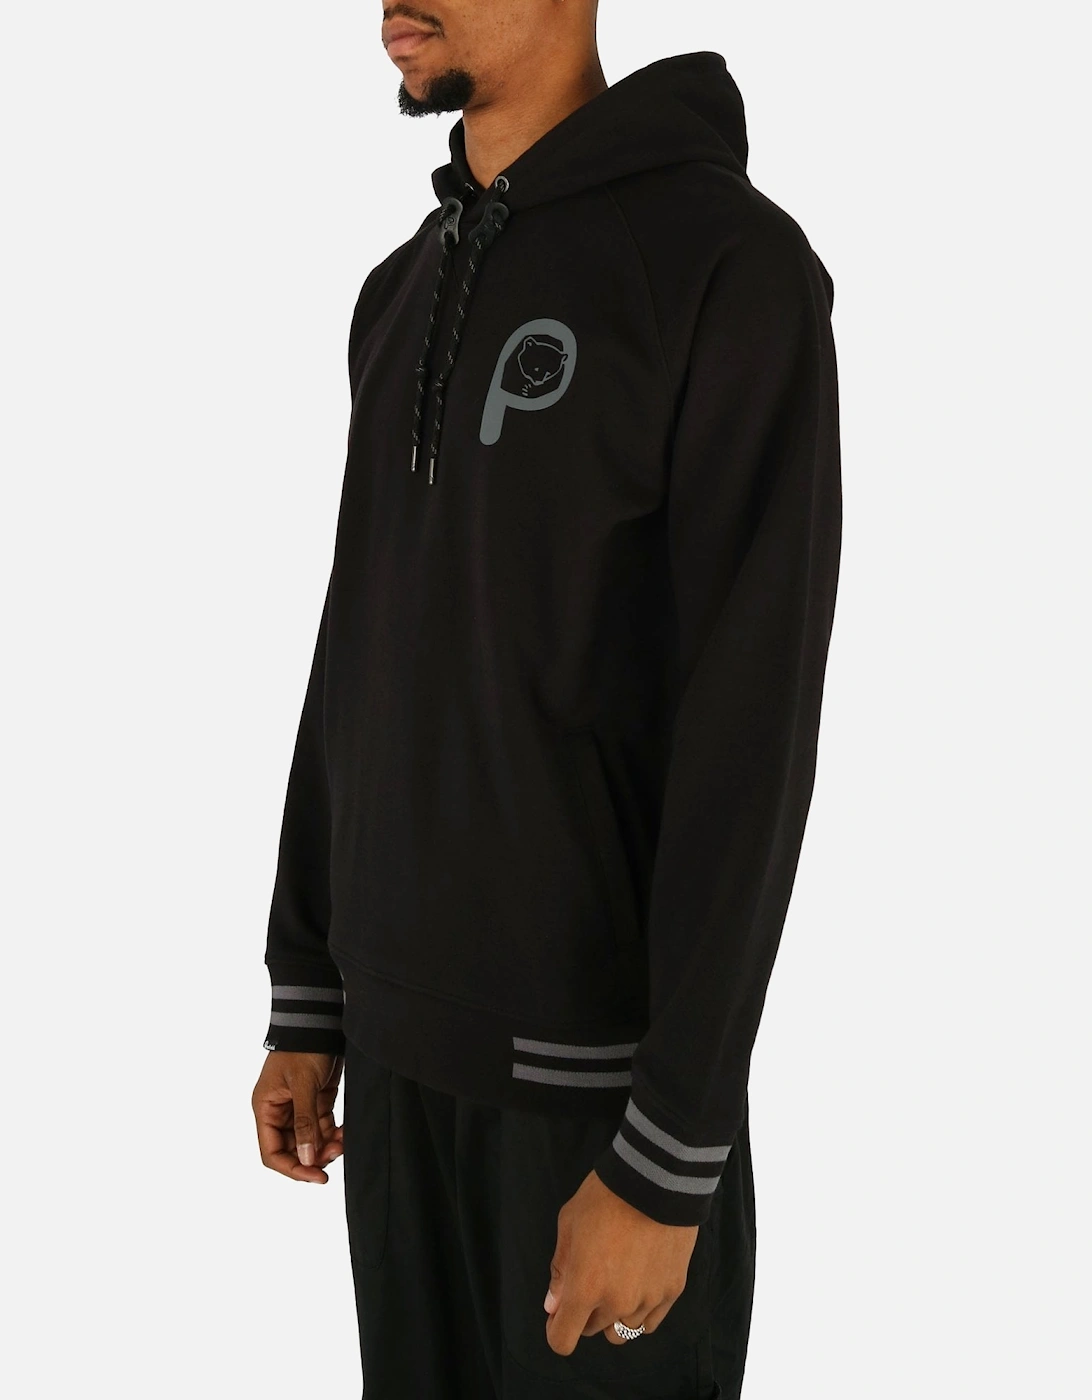 P Bear Pullover Black hooded Sweatshirt